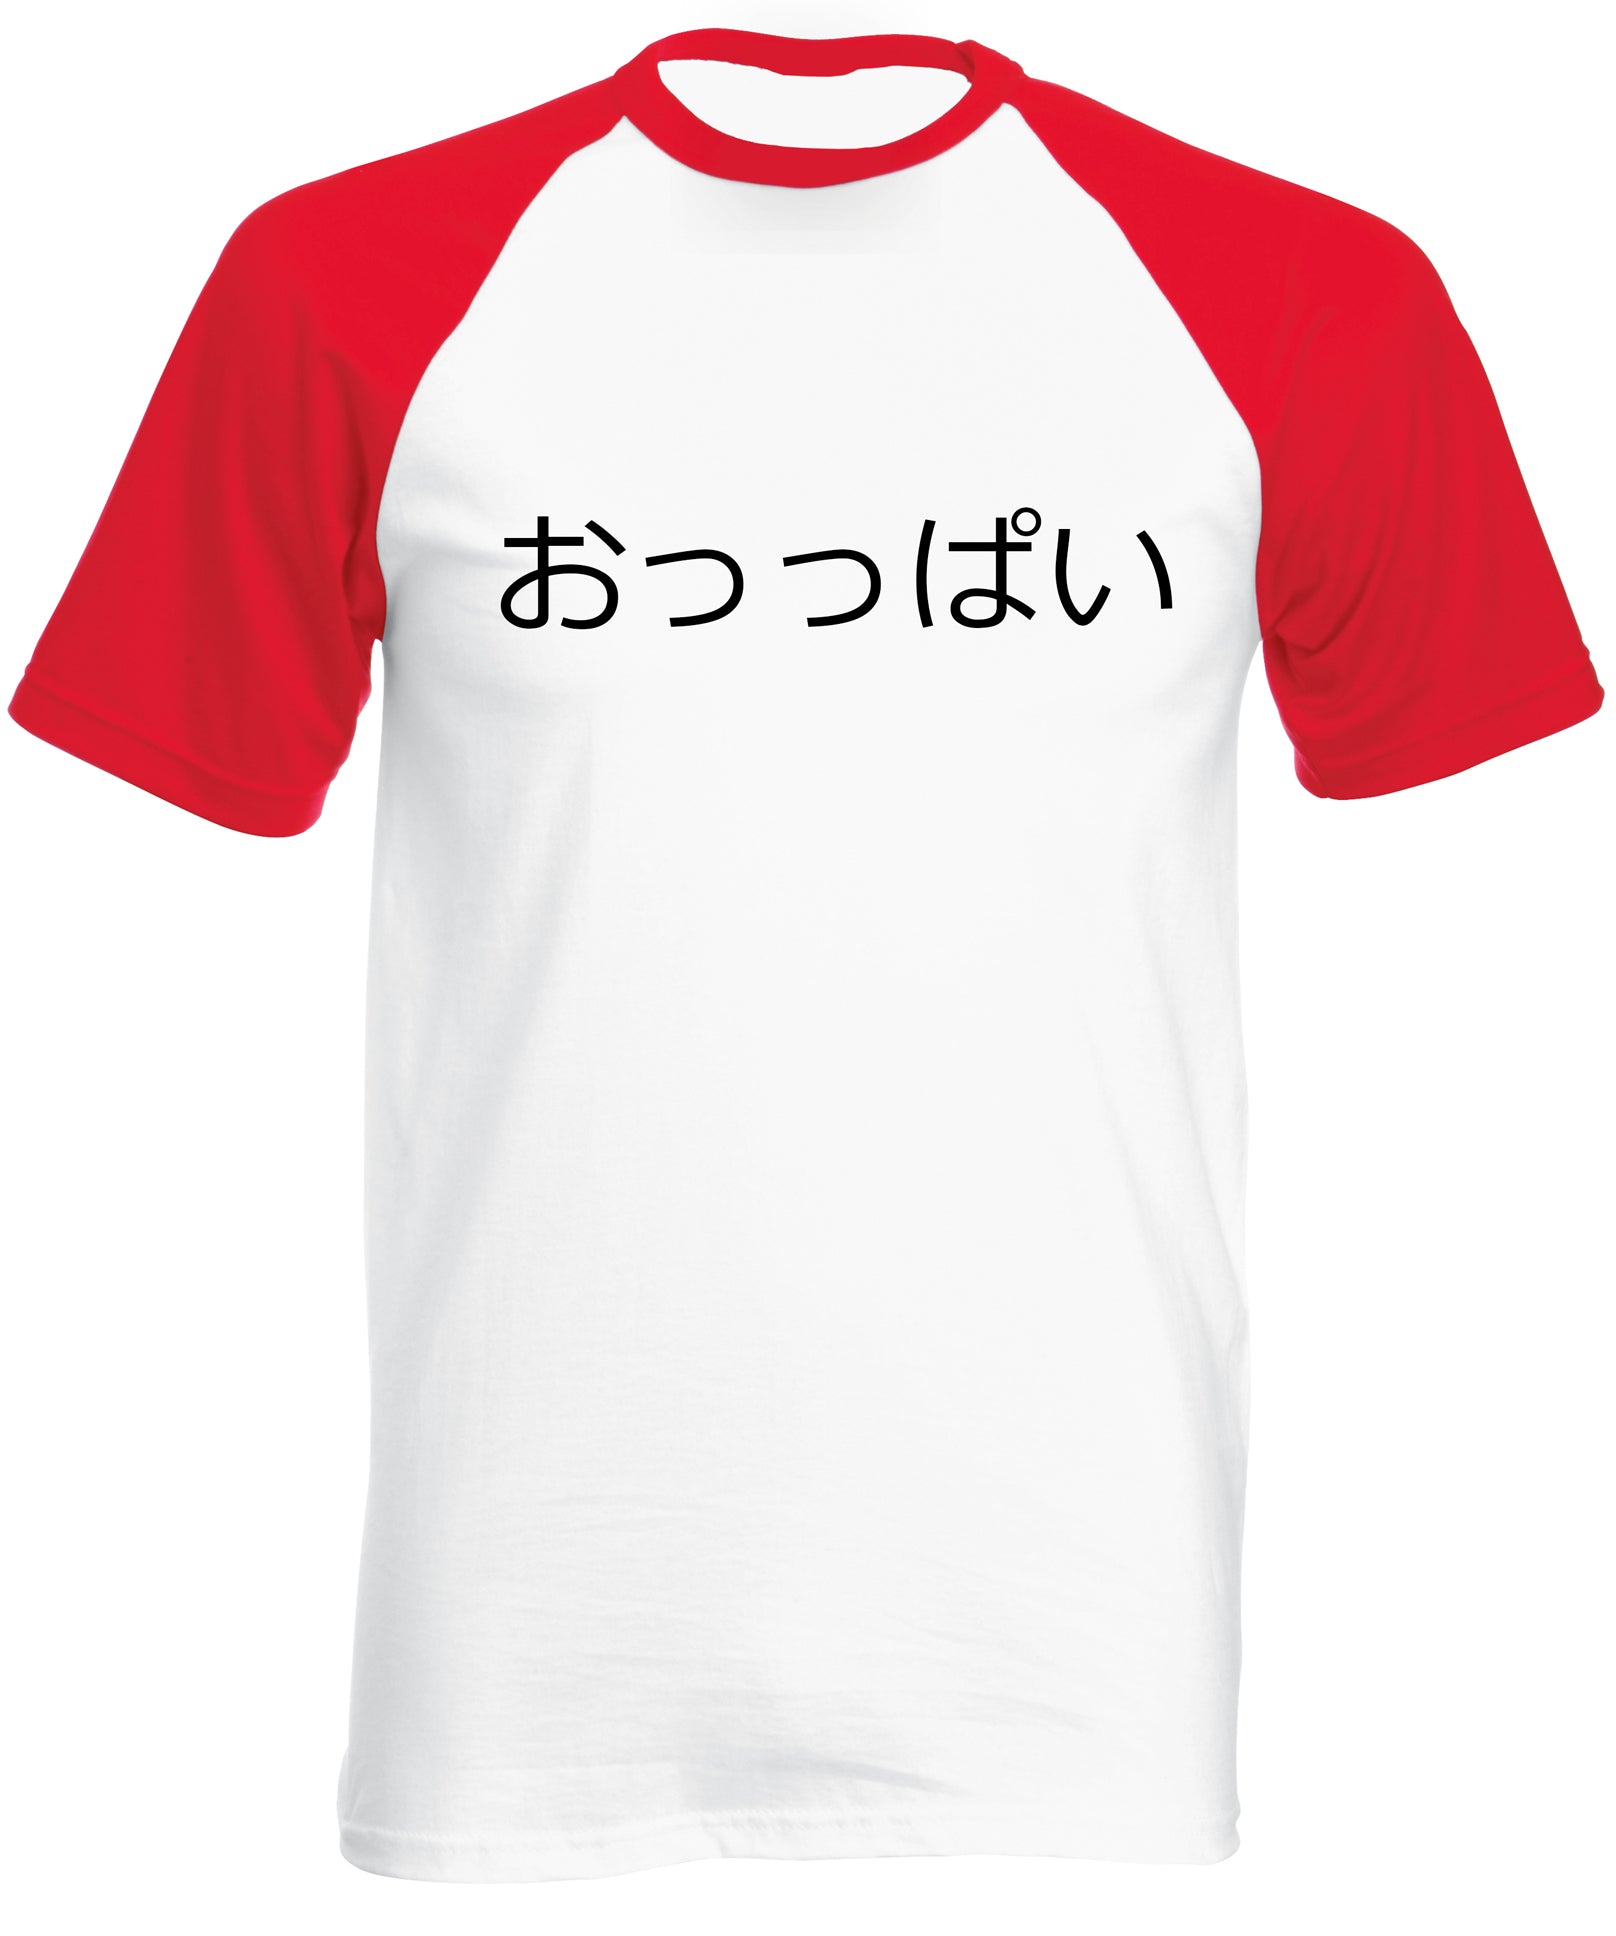 Japanese Boobs Oppai Slogan Mens Baseball Shirt Kanji Funny Slogan